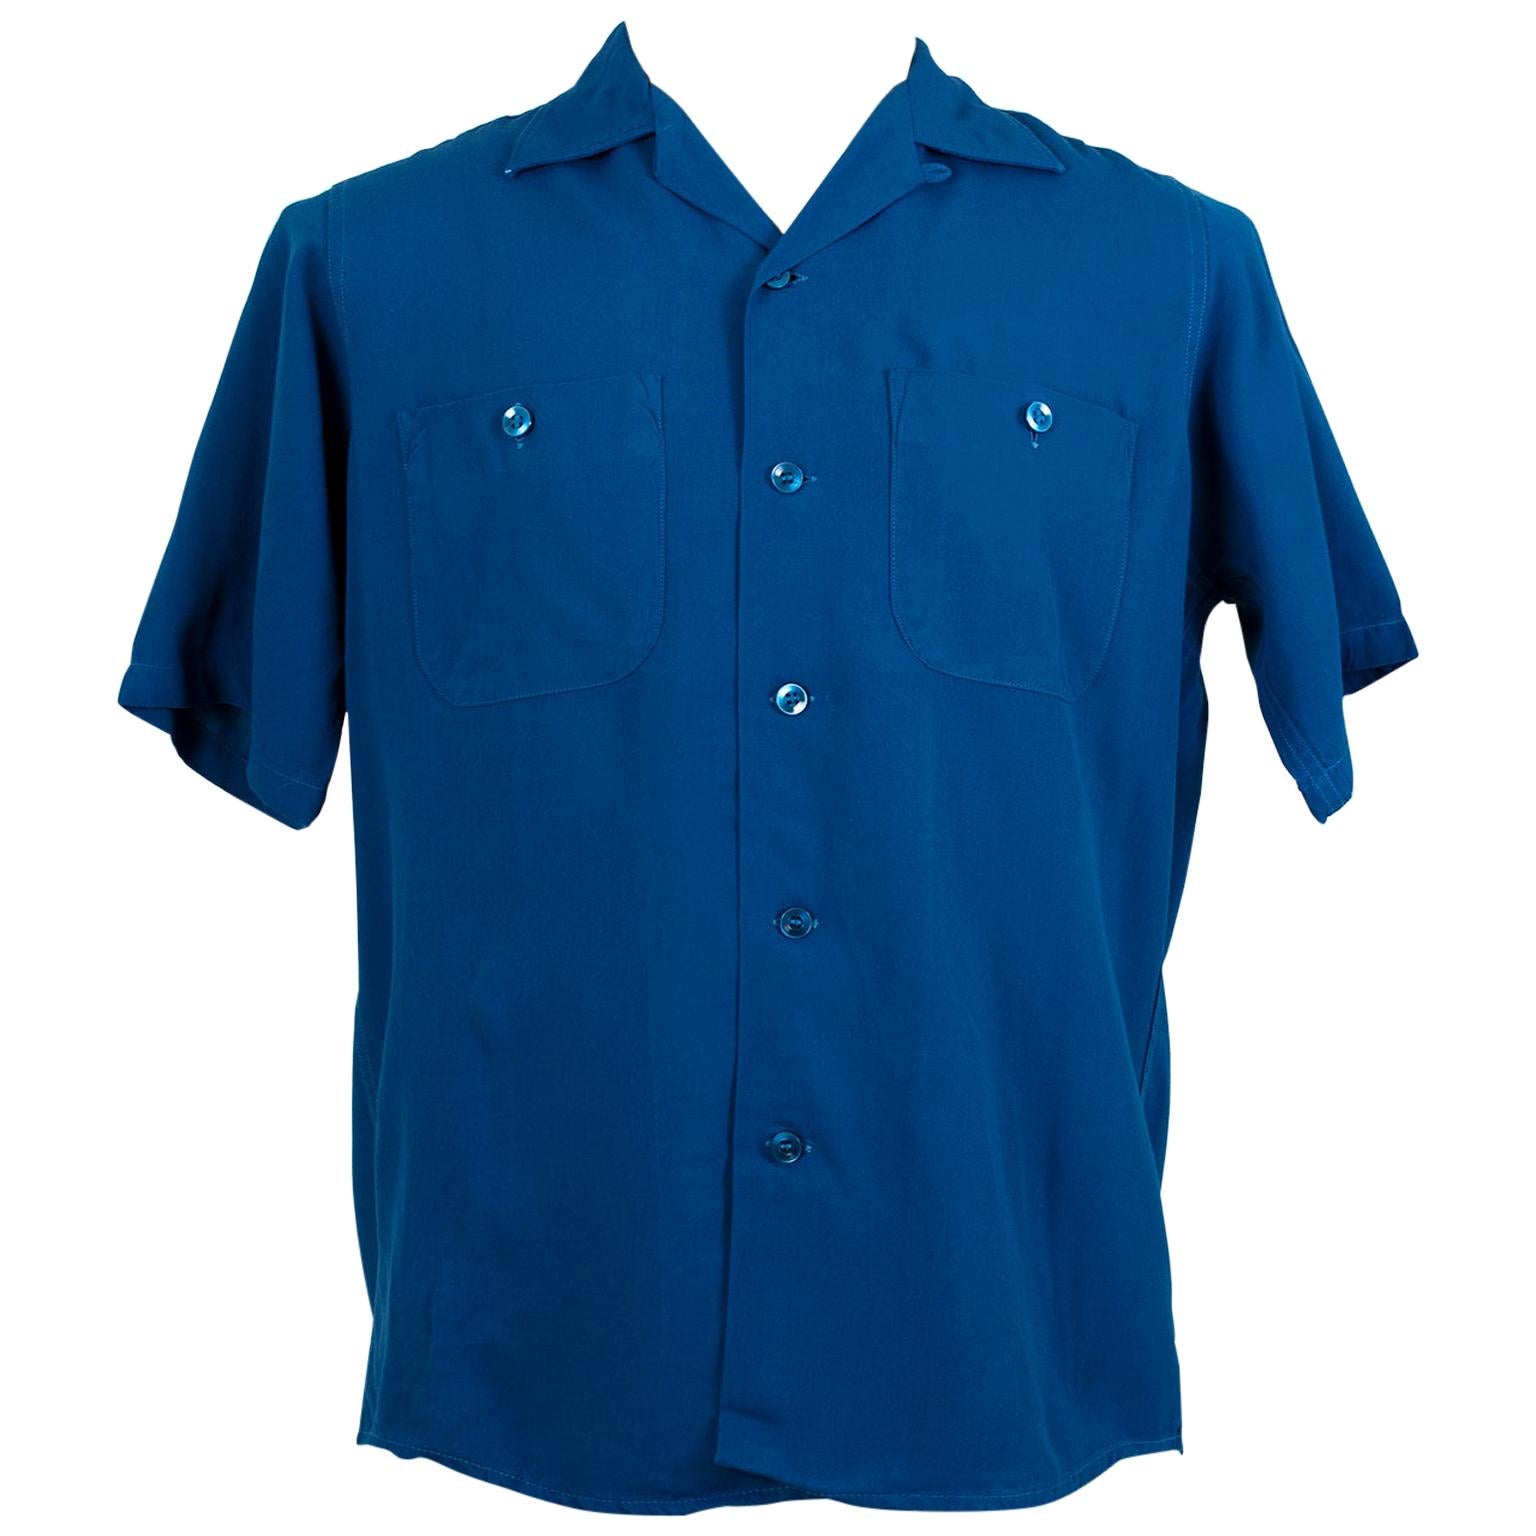 Men’s King Louie Ten Strike Royal Blue Bowling Shirt – Medium, 1950s